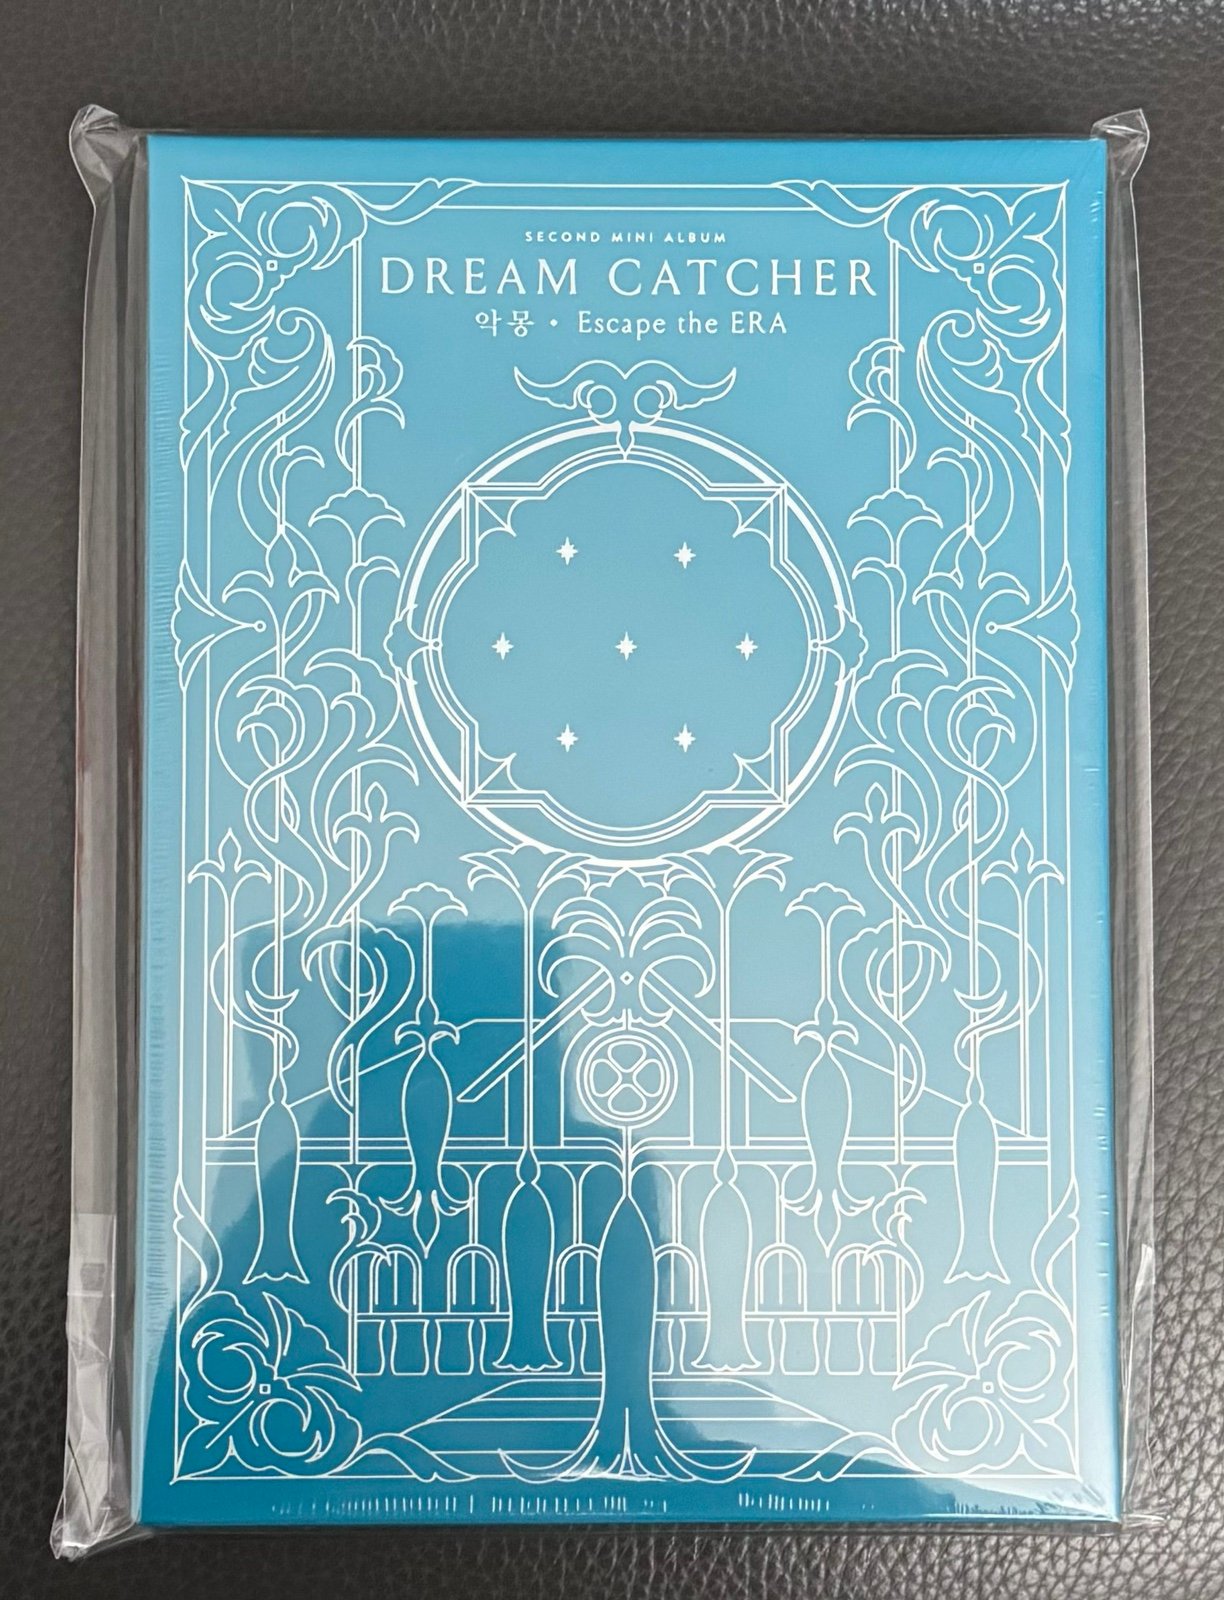 dreamcatcher escape the era(sealed) 2QlWlybeS